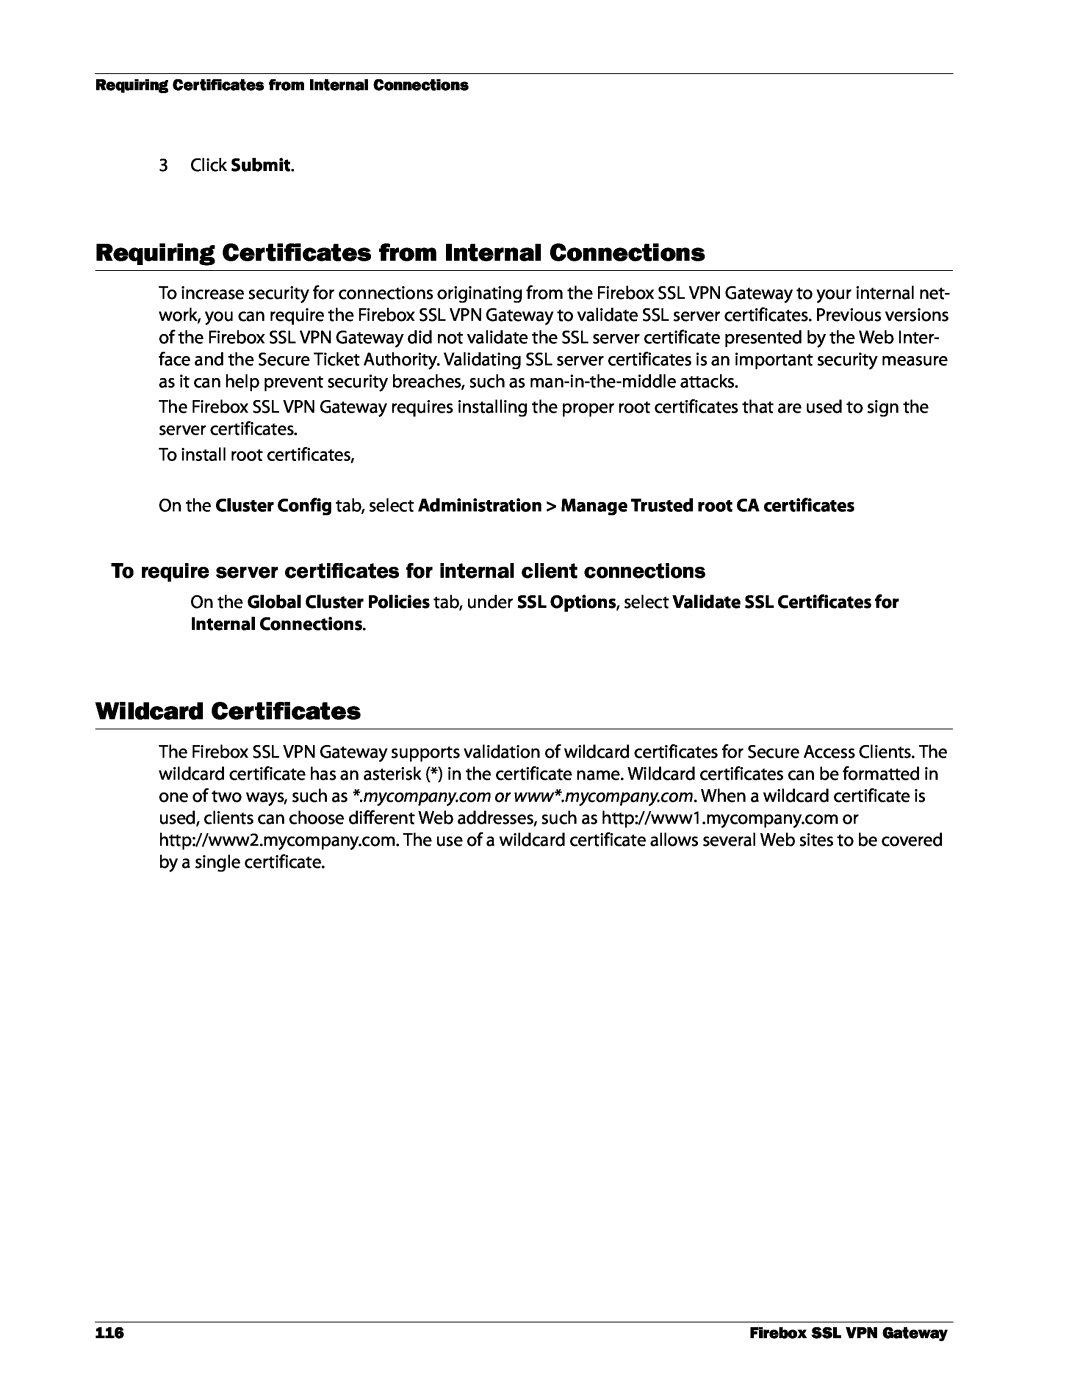 WatchGuard Technologies SSL VPN manual Requiring Certificates from Internal Connections, Wildcard Certificates 